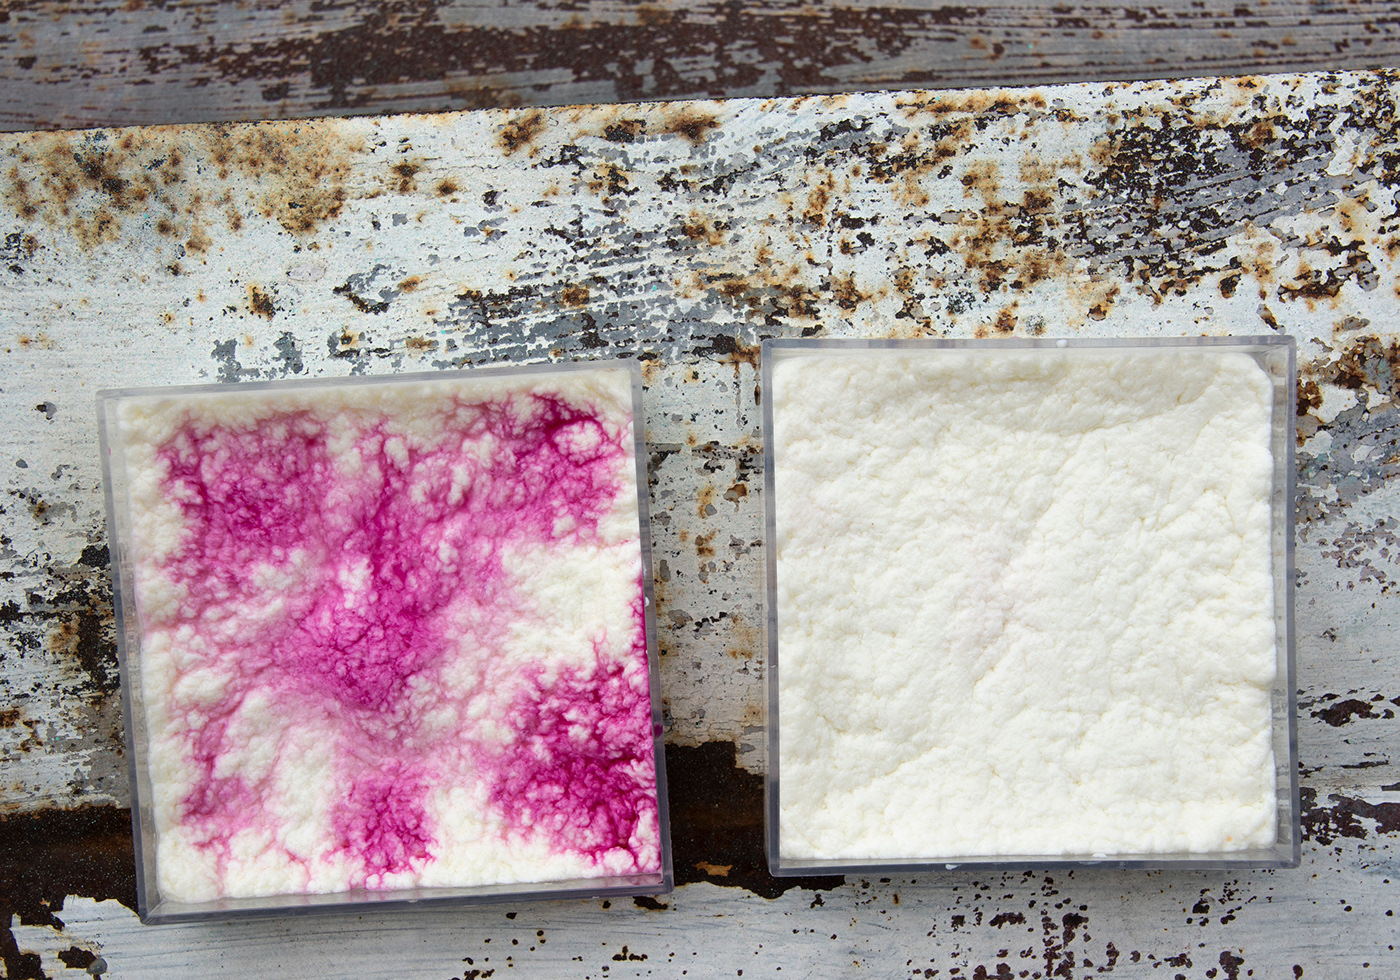 BioFabrication algae Fungi dyeing textile cellulose kombucha materials biomaterial